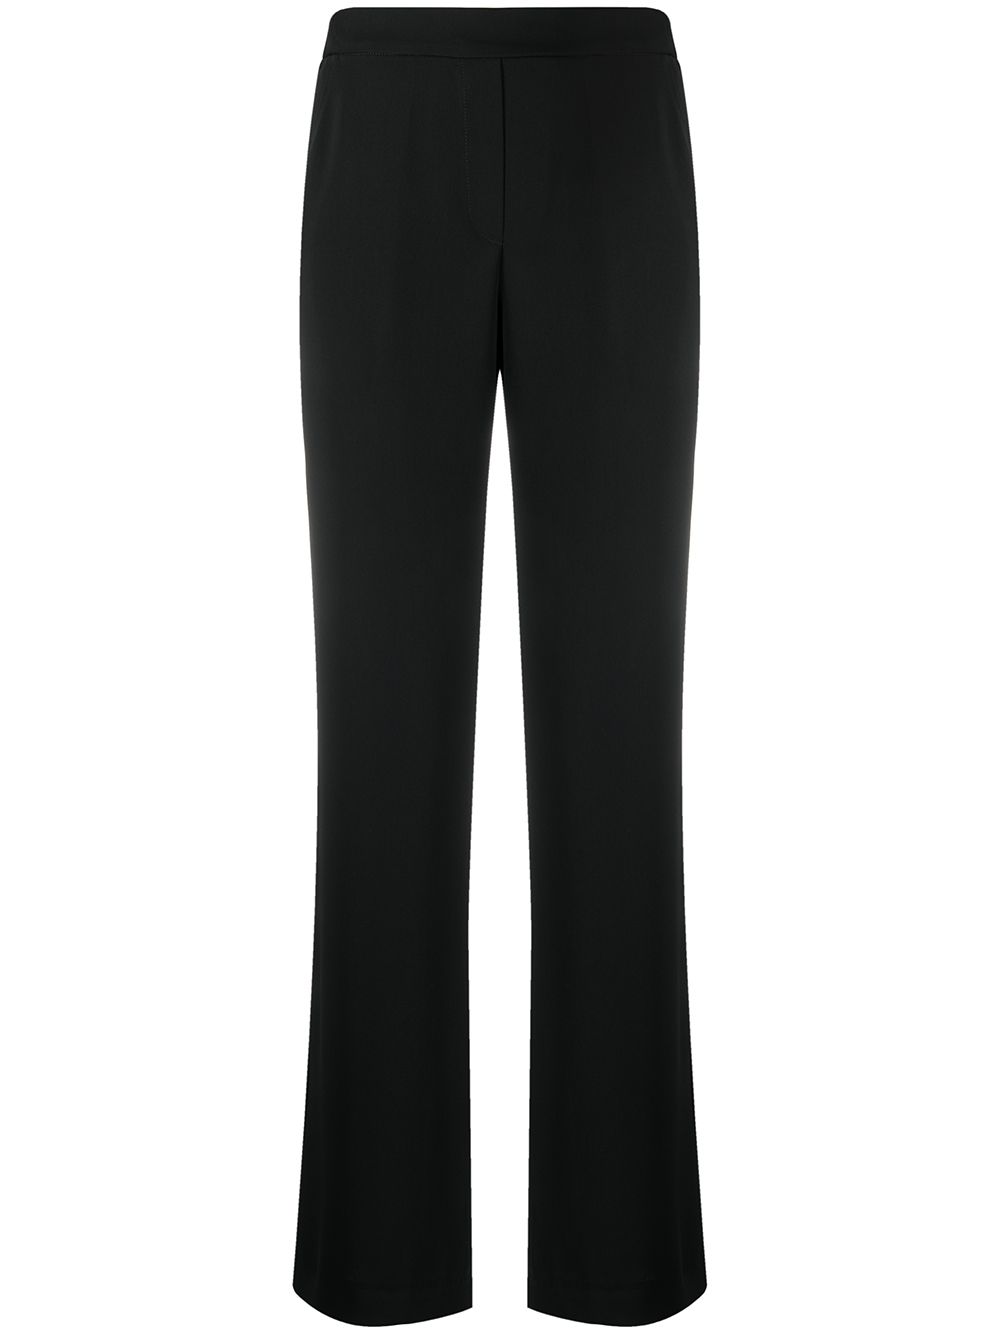 Black straight-leg trousers